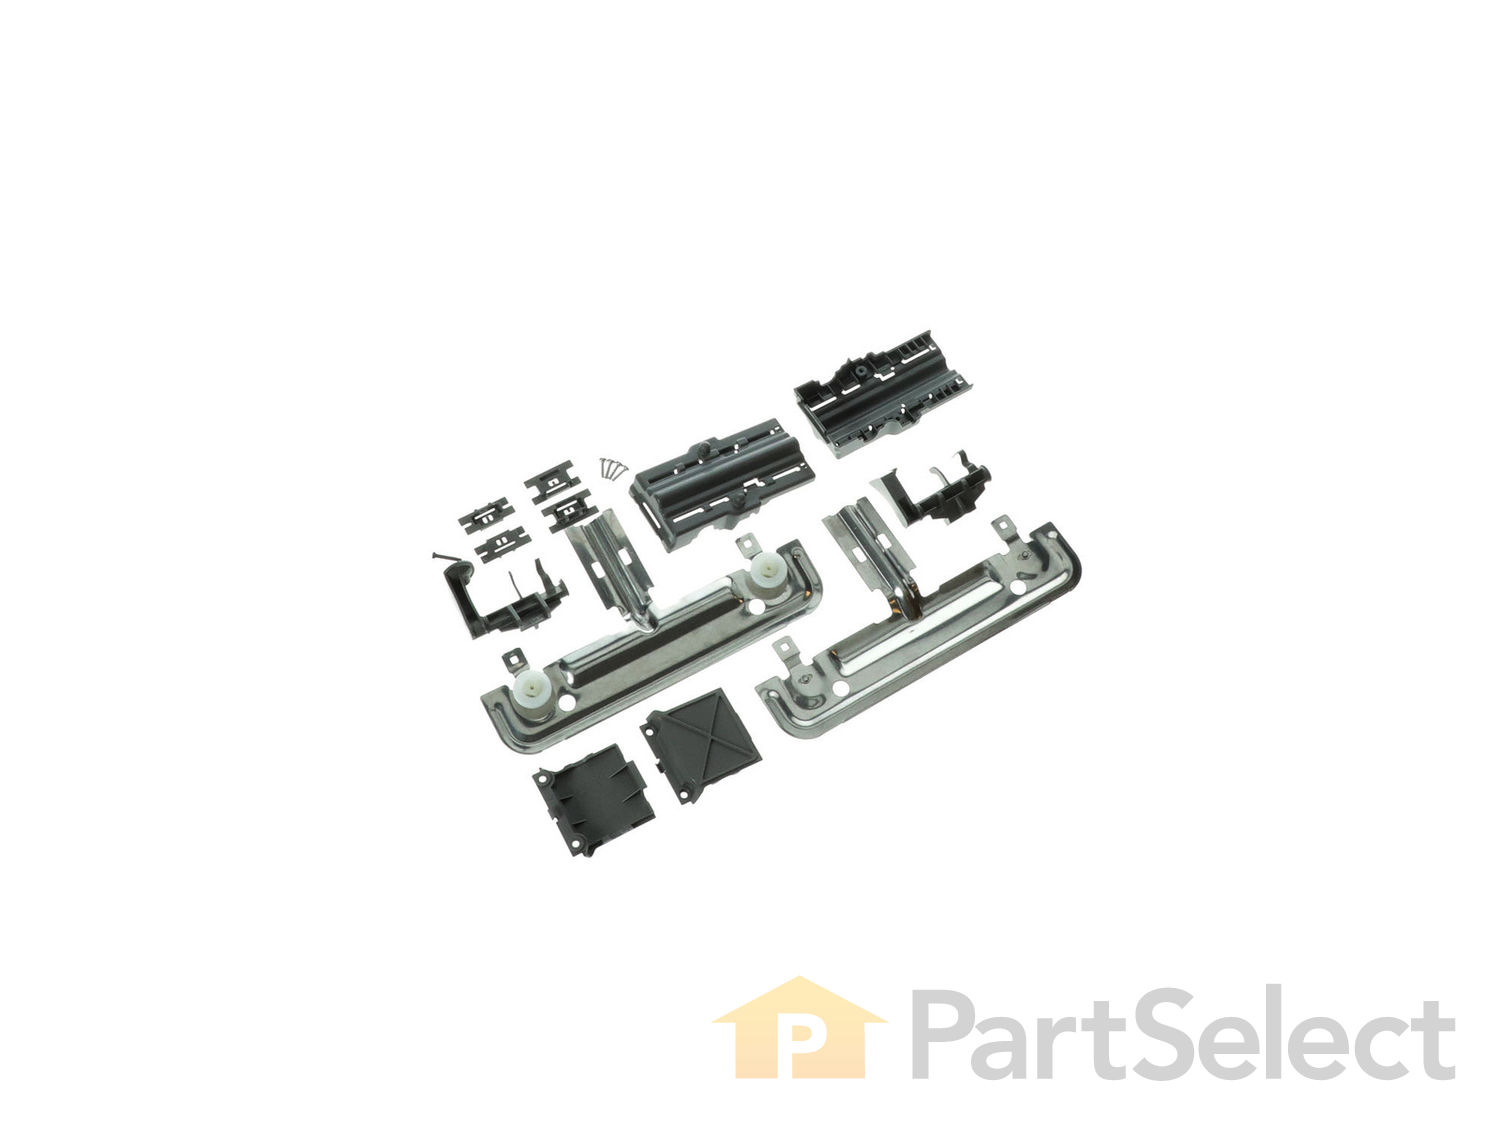 KitchenAid Dishwasher Upper Rack Adjuster Replacement Part W10350376 